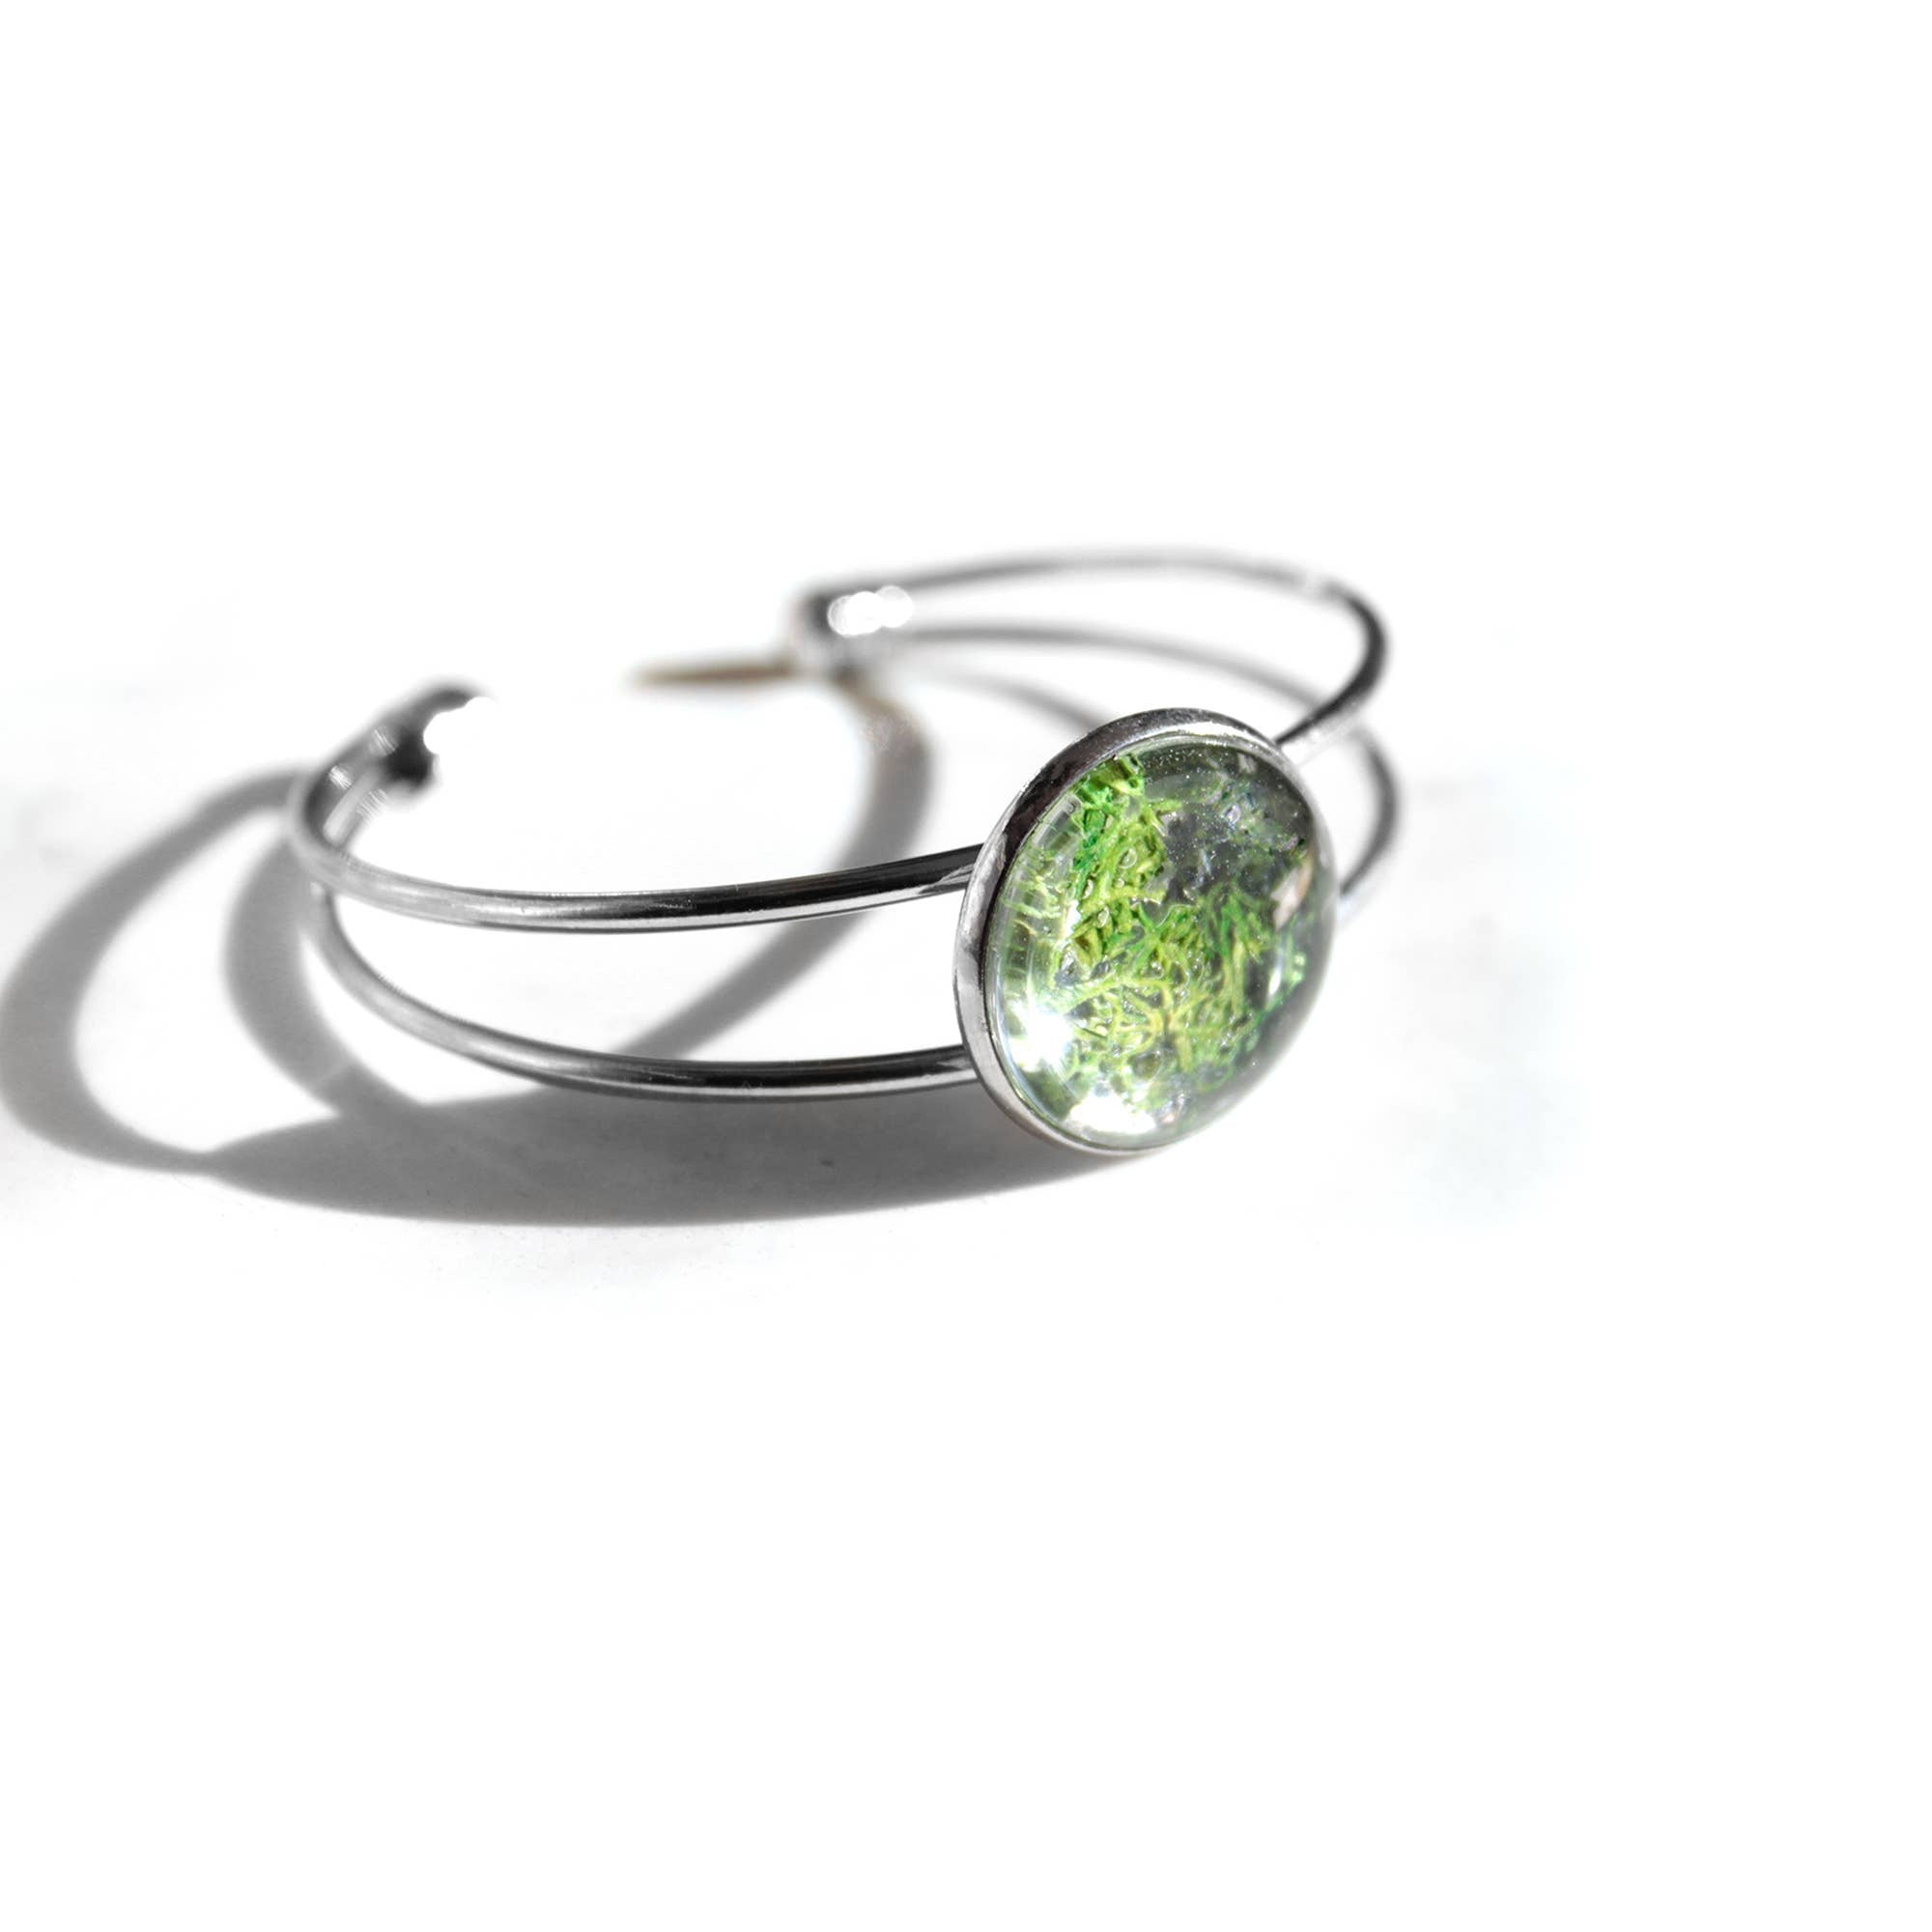 Glass Moss Cuff Bracelet